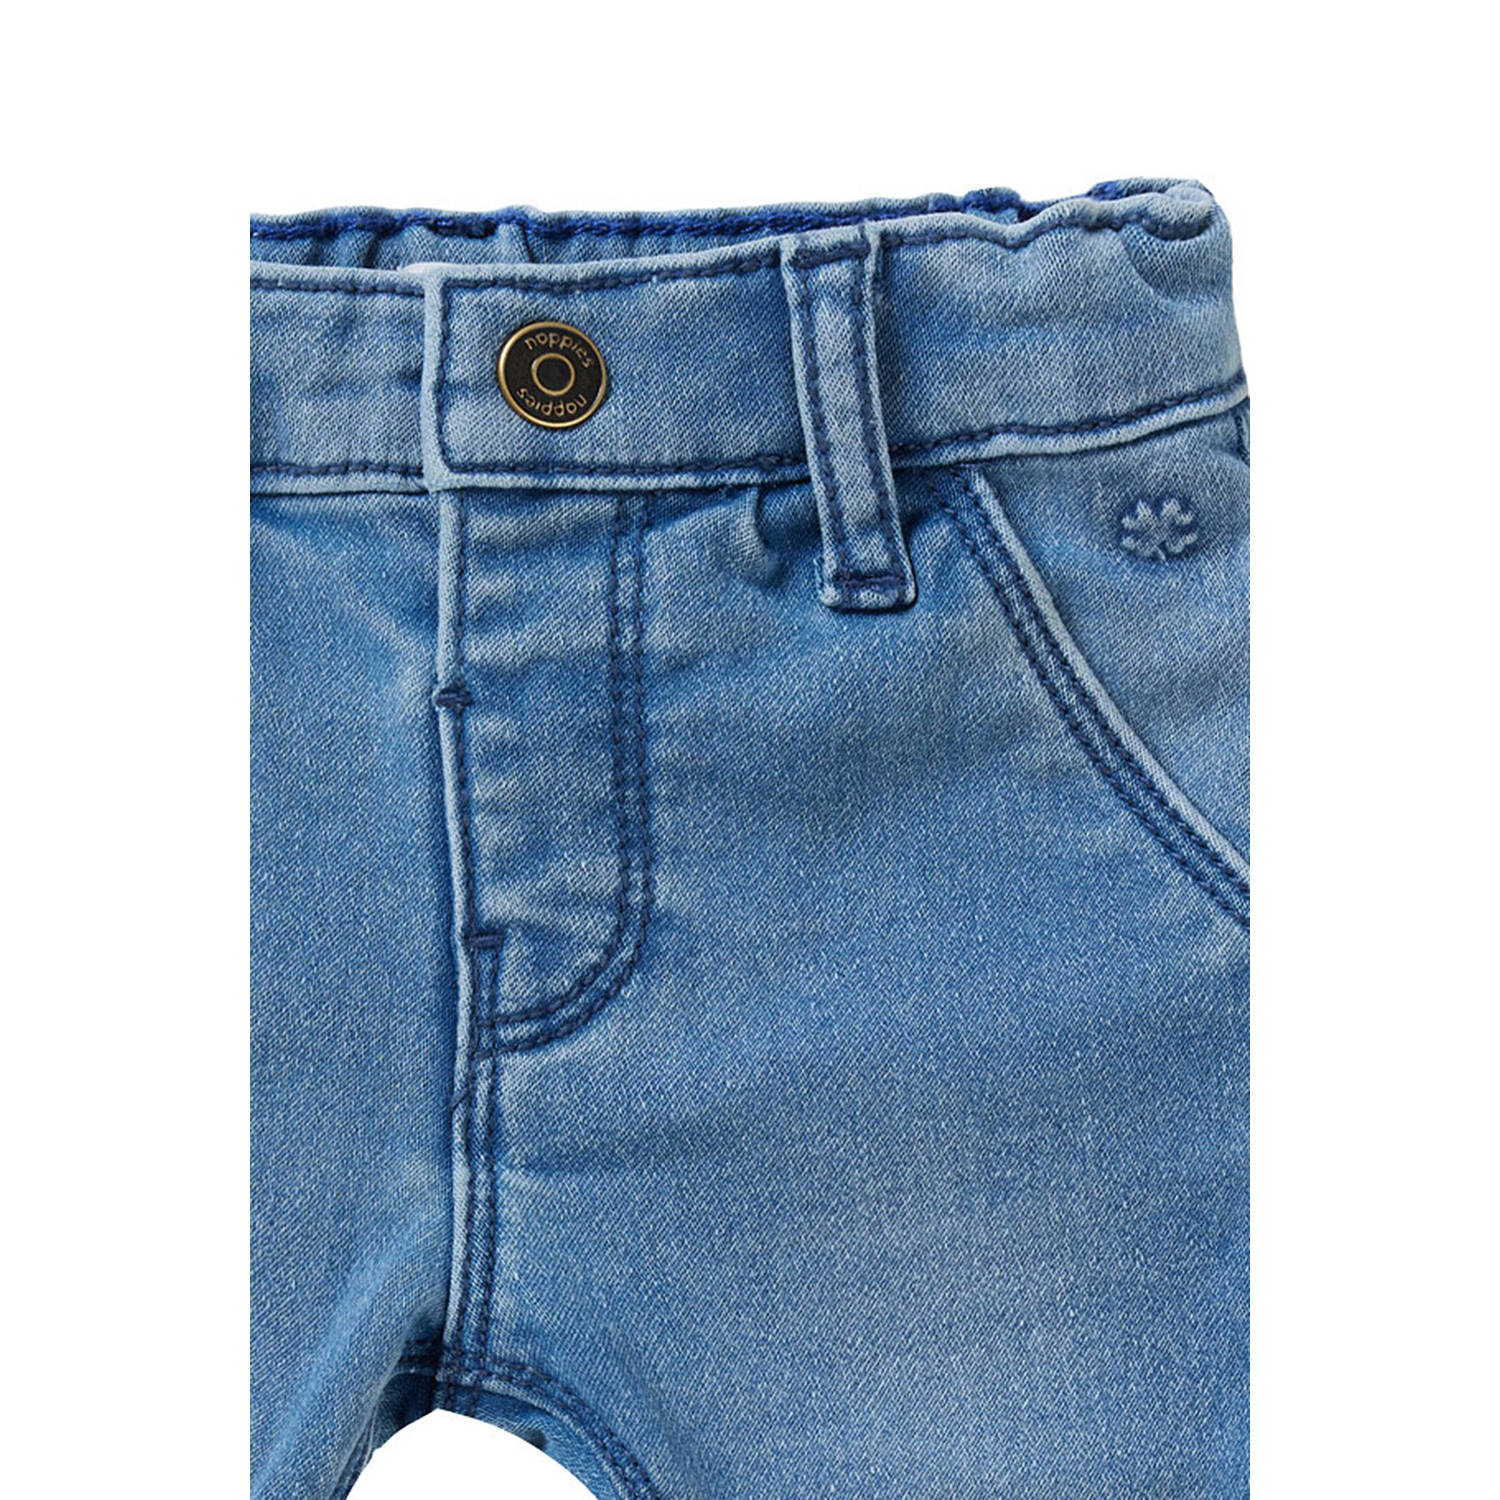 Noppies baby regular fit jeans medium blue denim